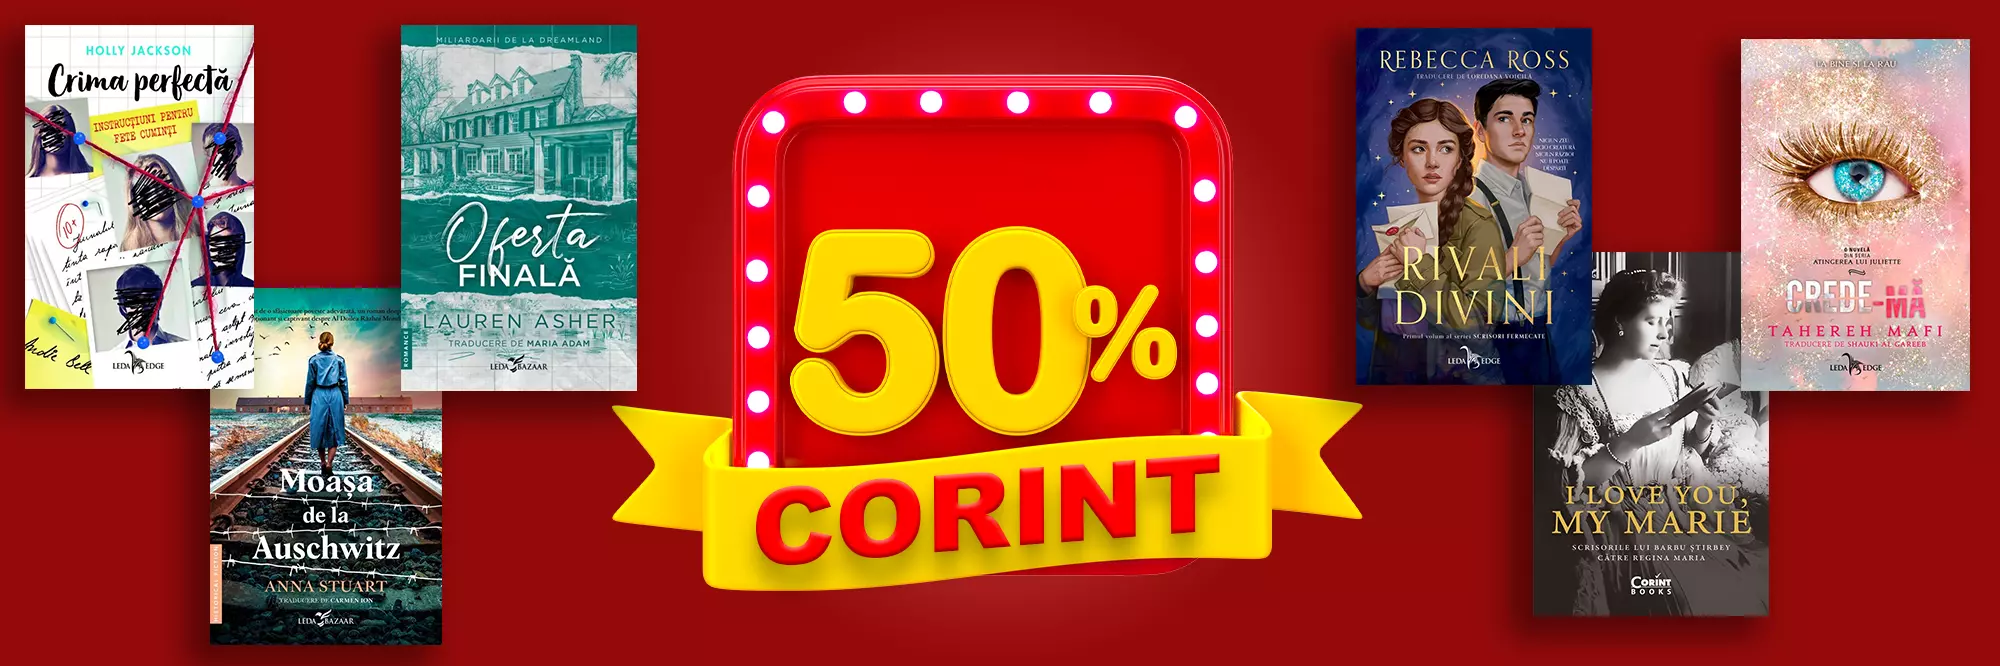 50% CORINT